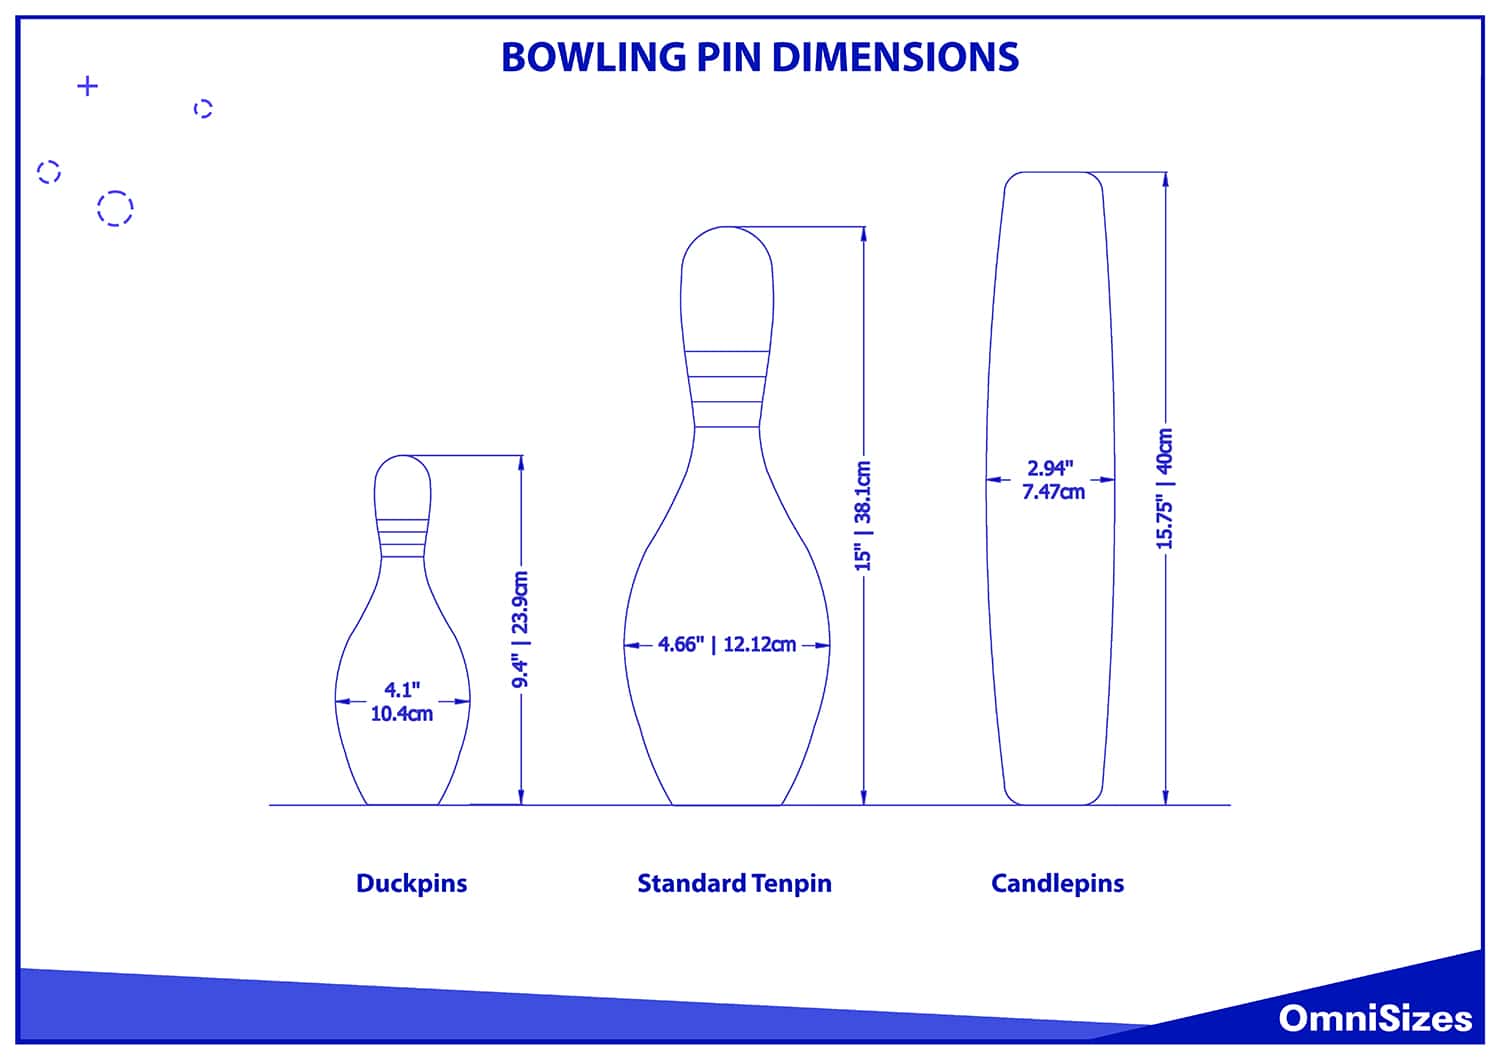 Bowling pin dimensions